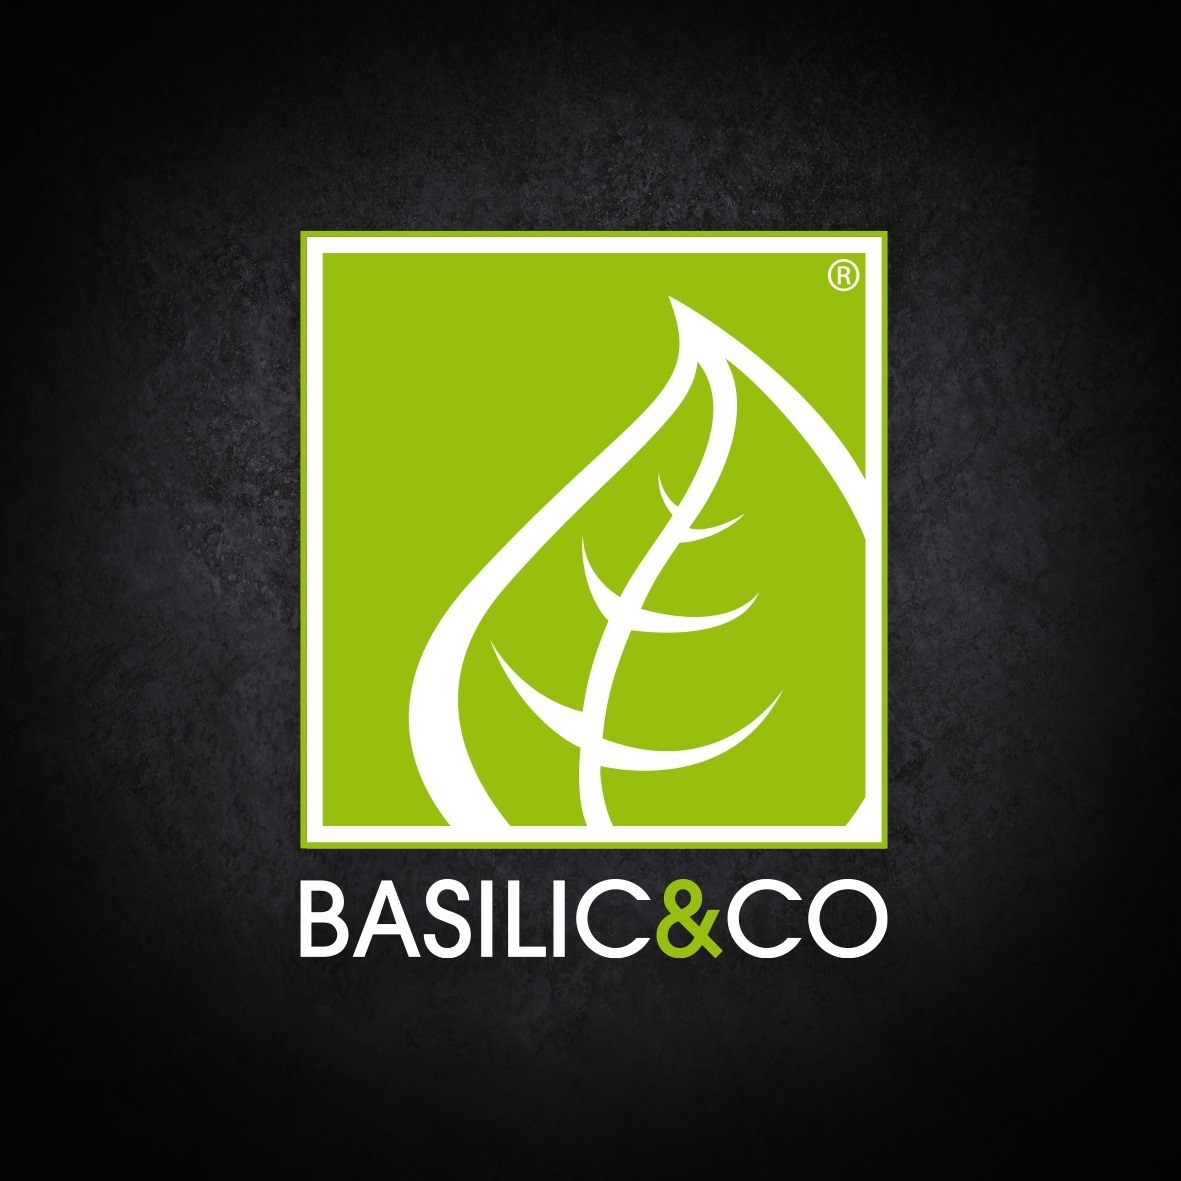 Basilic and co